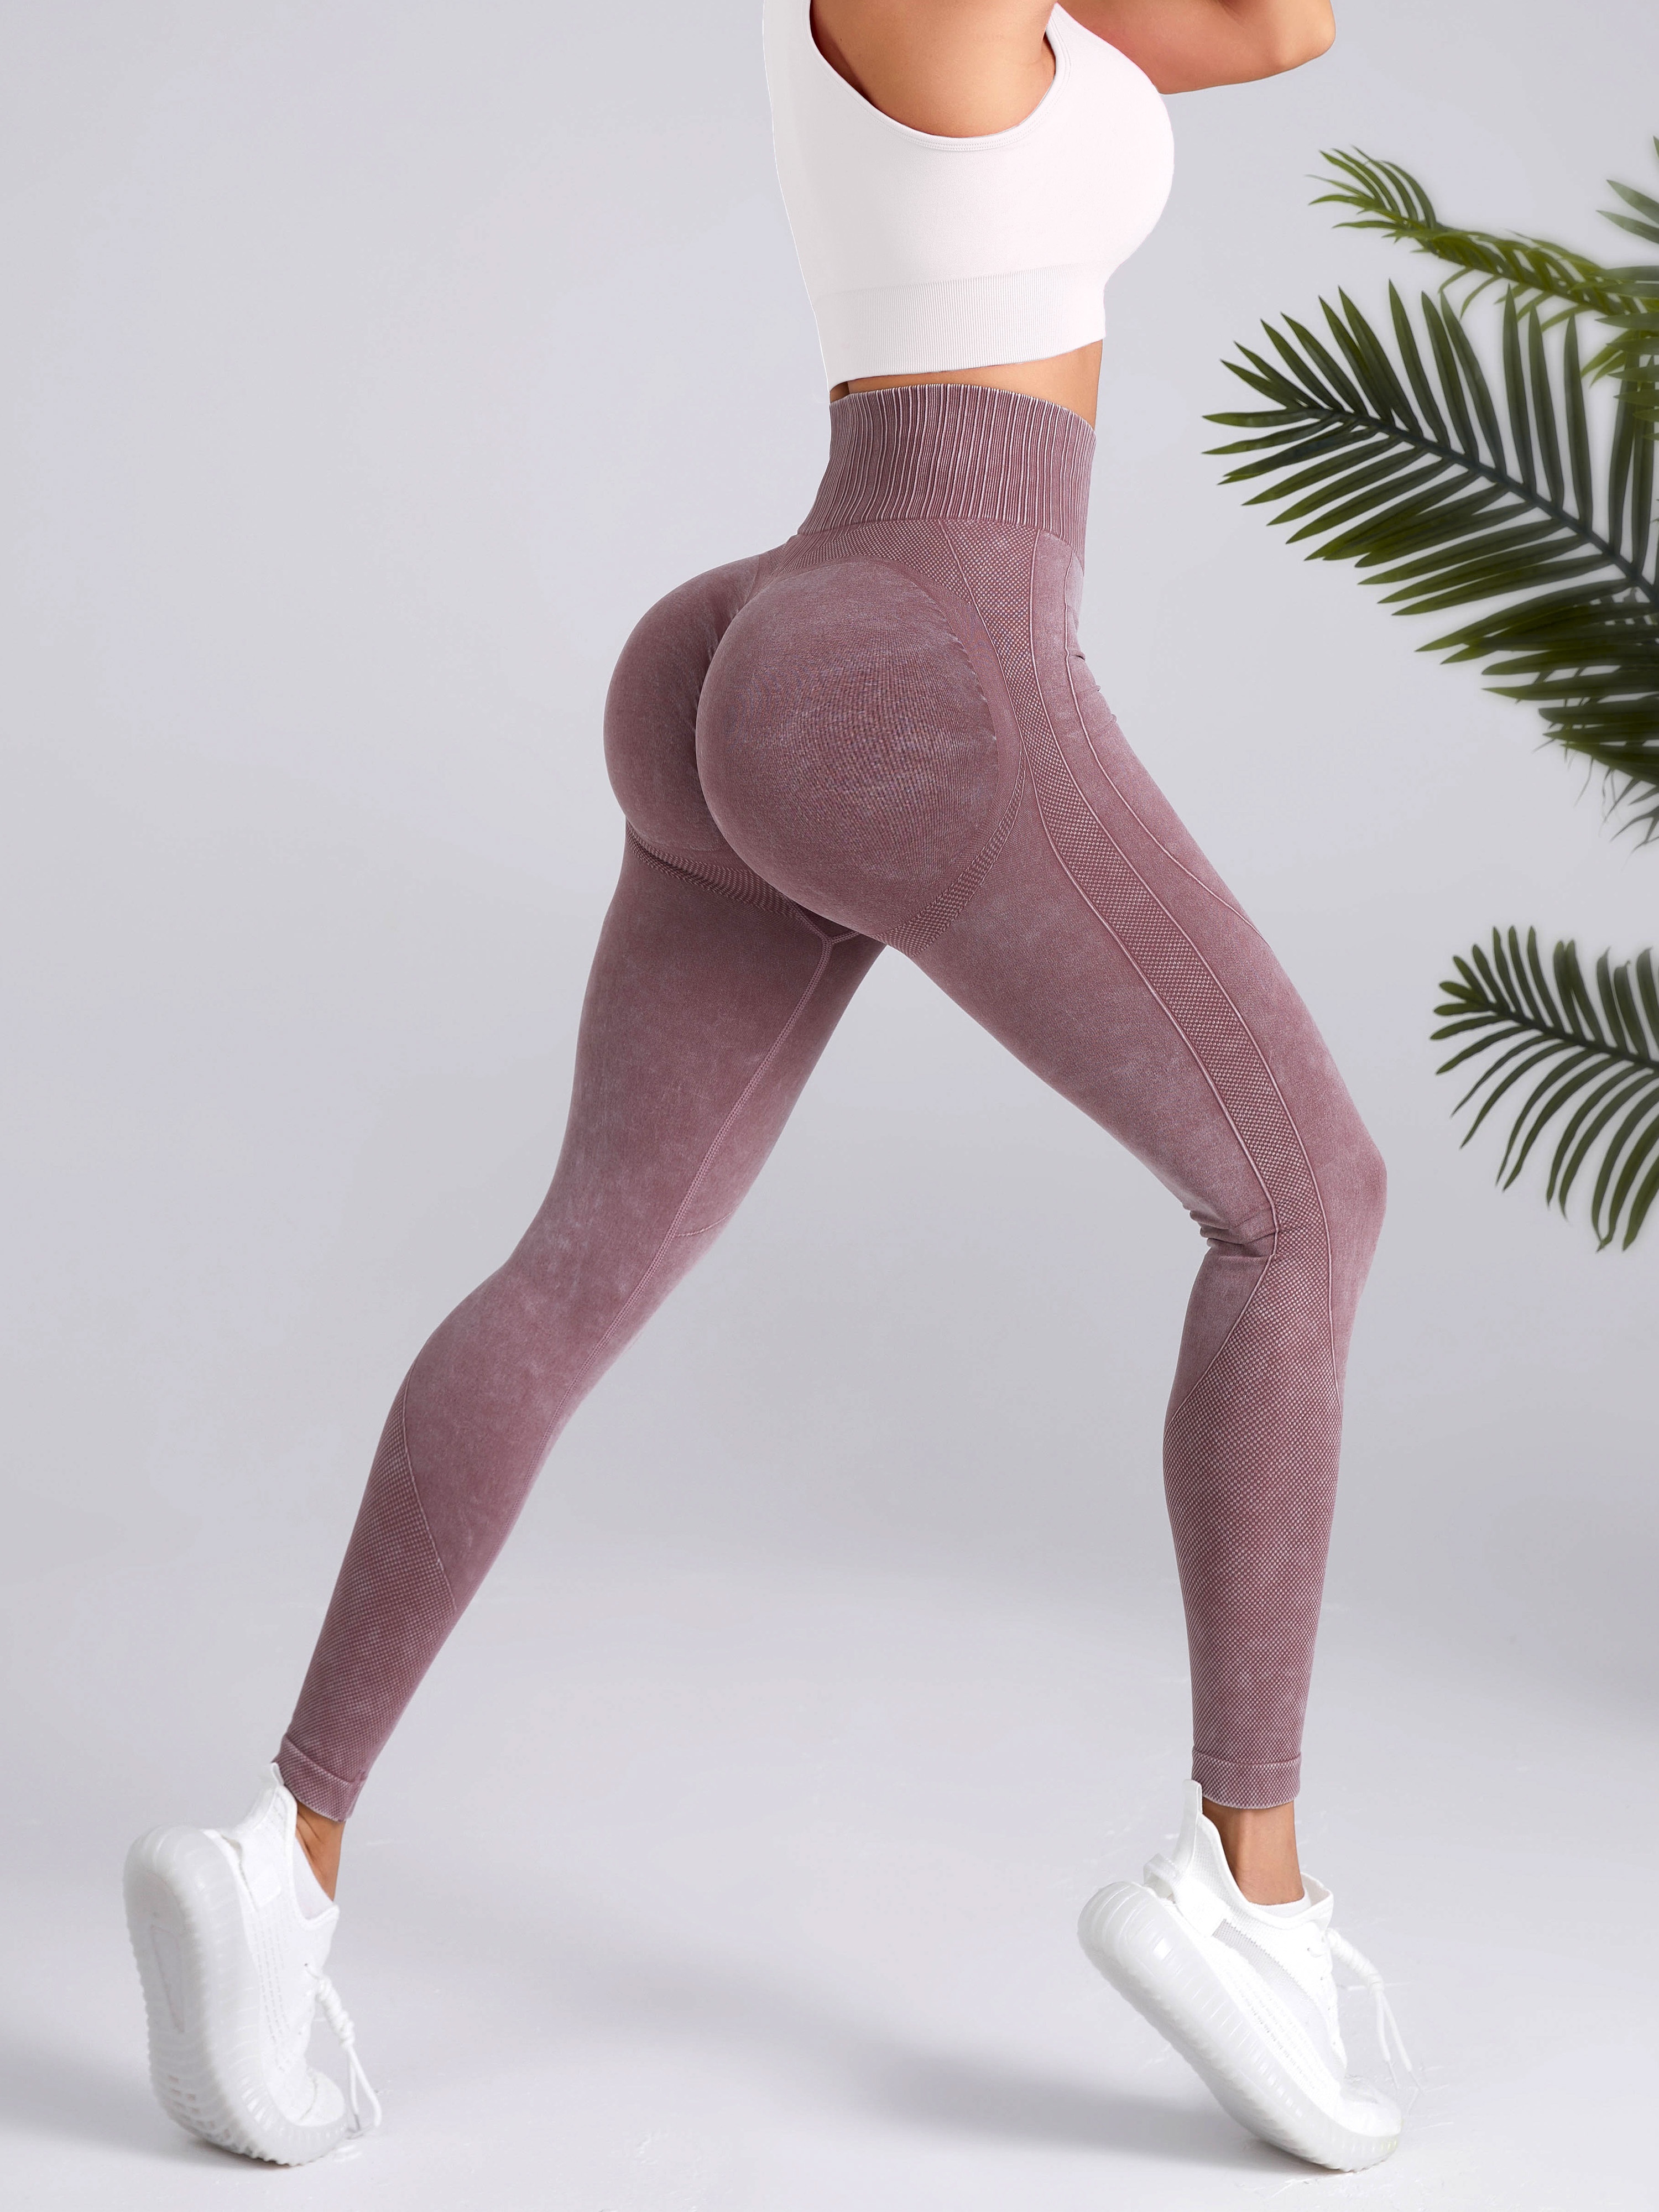 Tawop Yoga Pants,Fashion Women Long Solid Tight High Waist